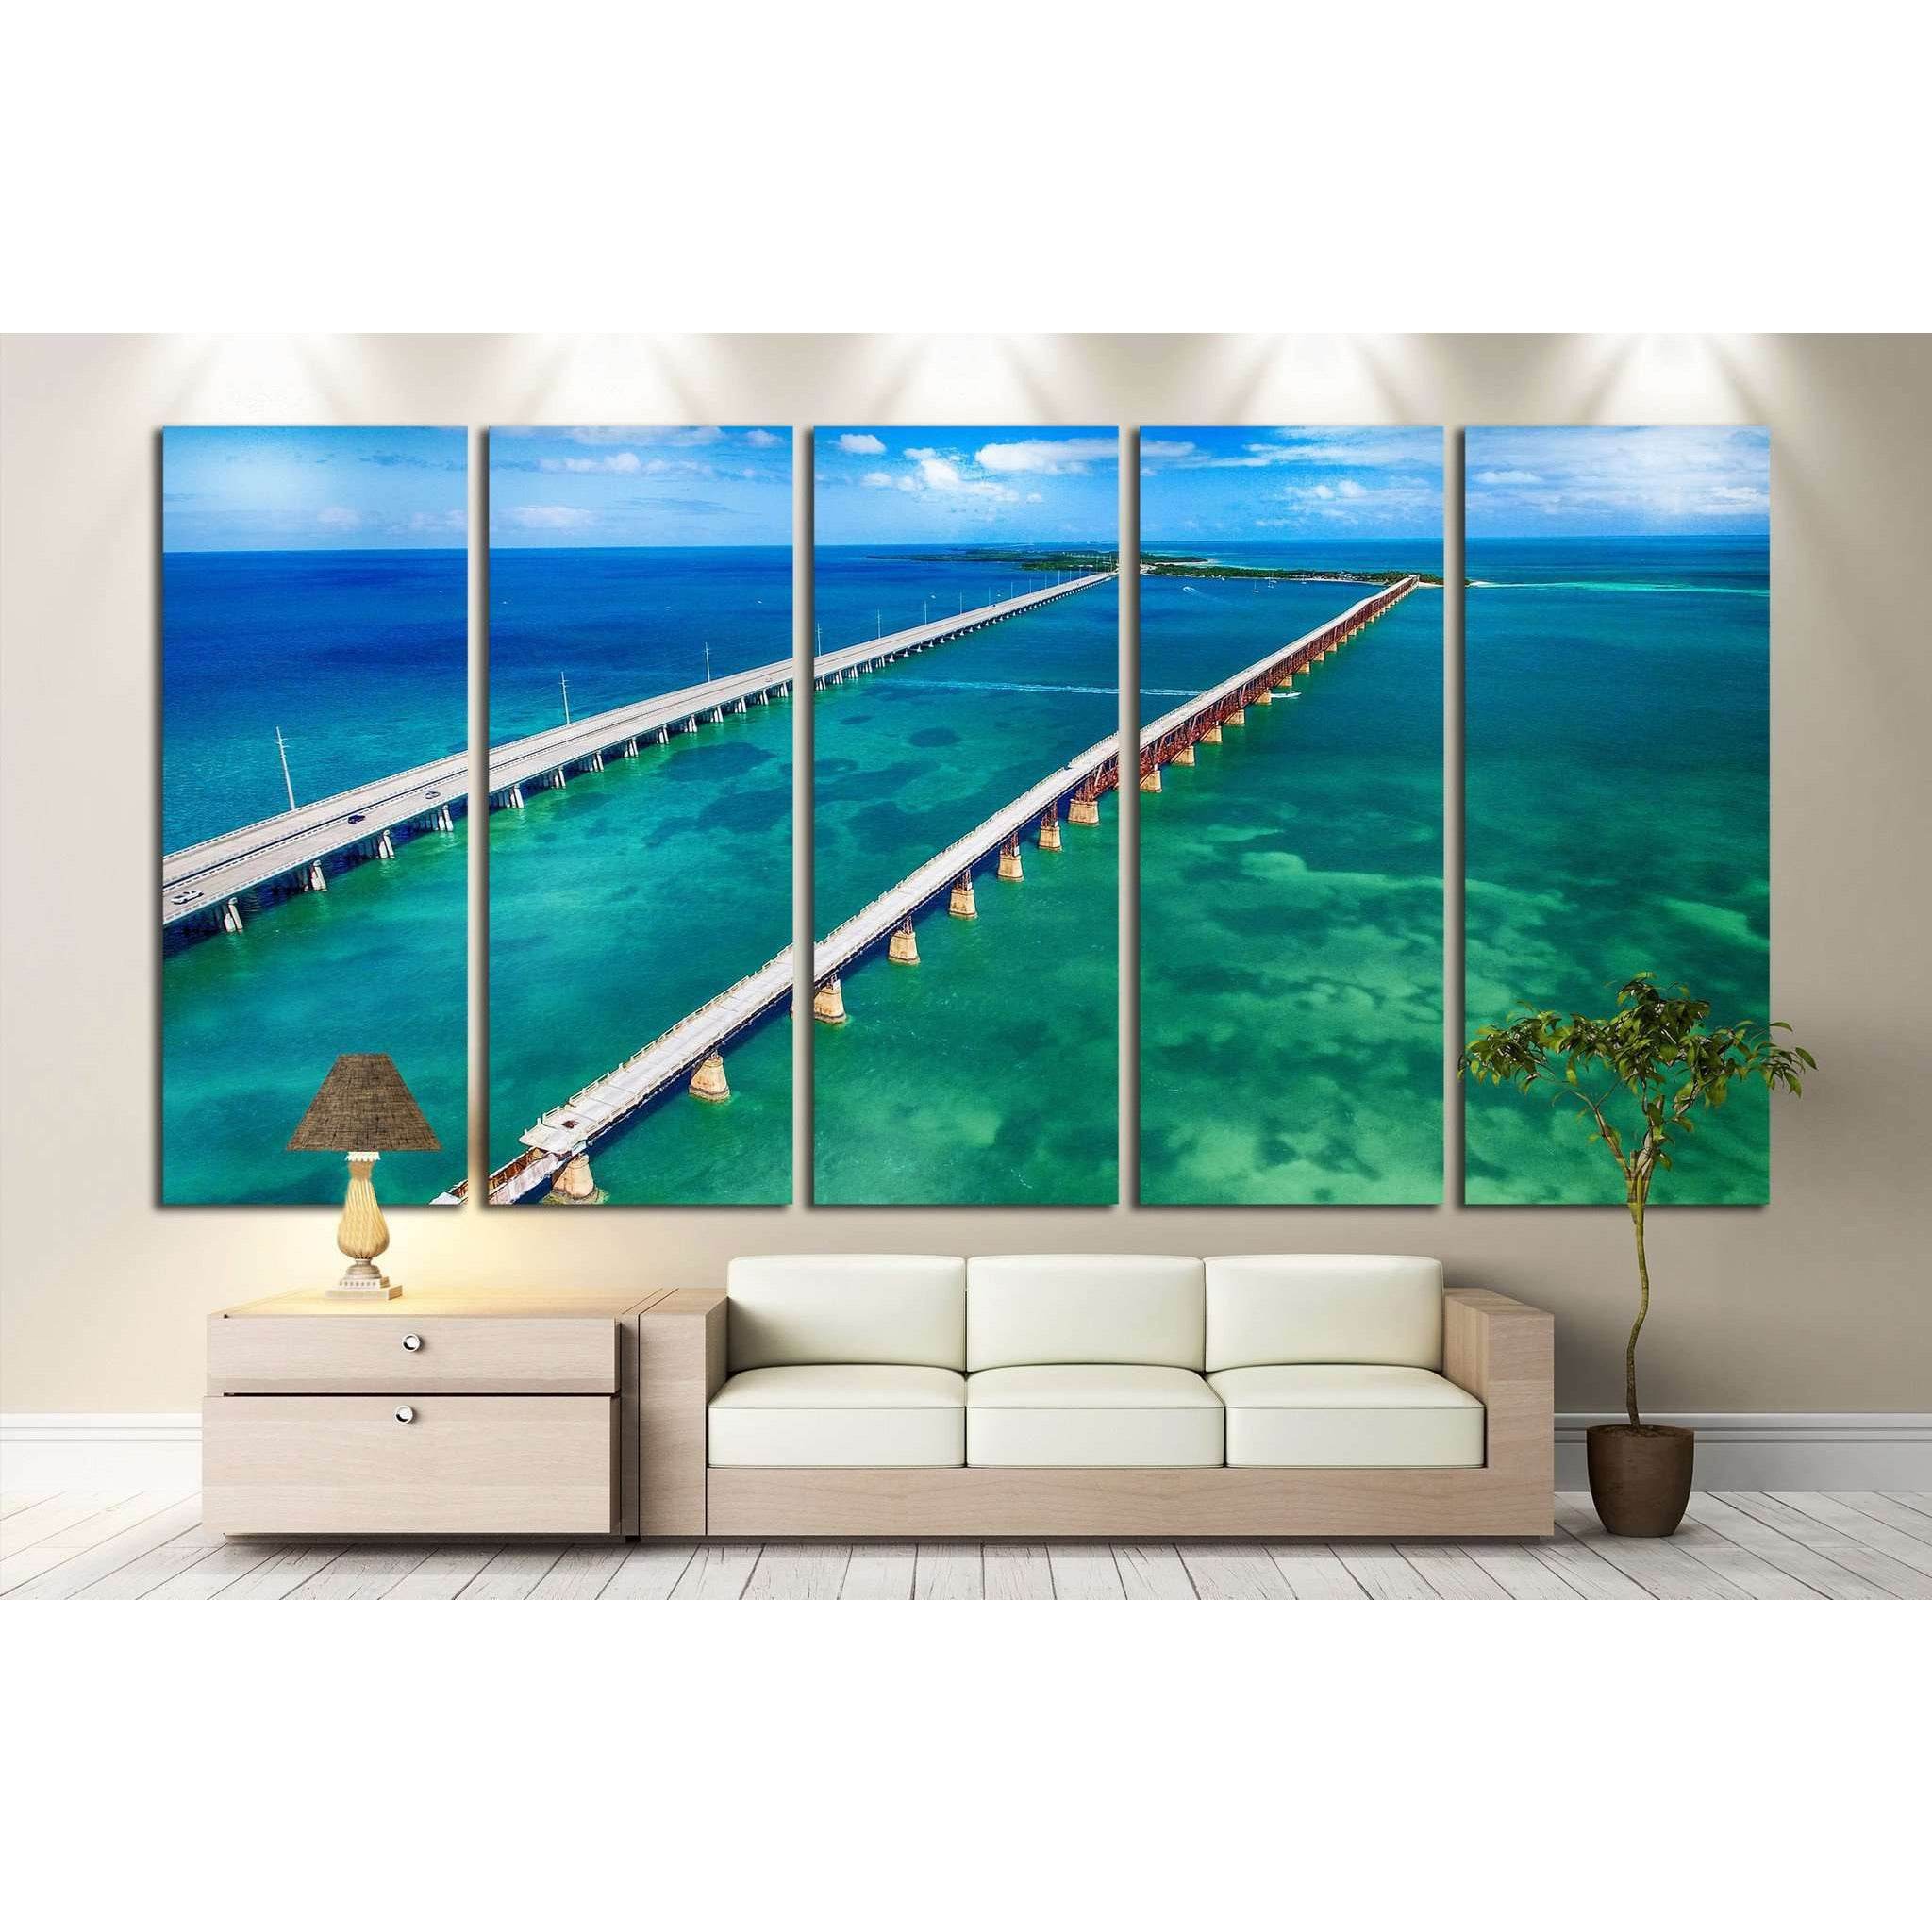 Aerial view of Bridge connecting Keys, Florida №1312 Ready to Hang Canvas Print